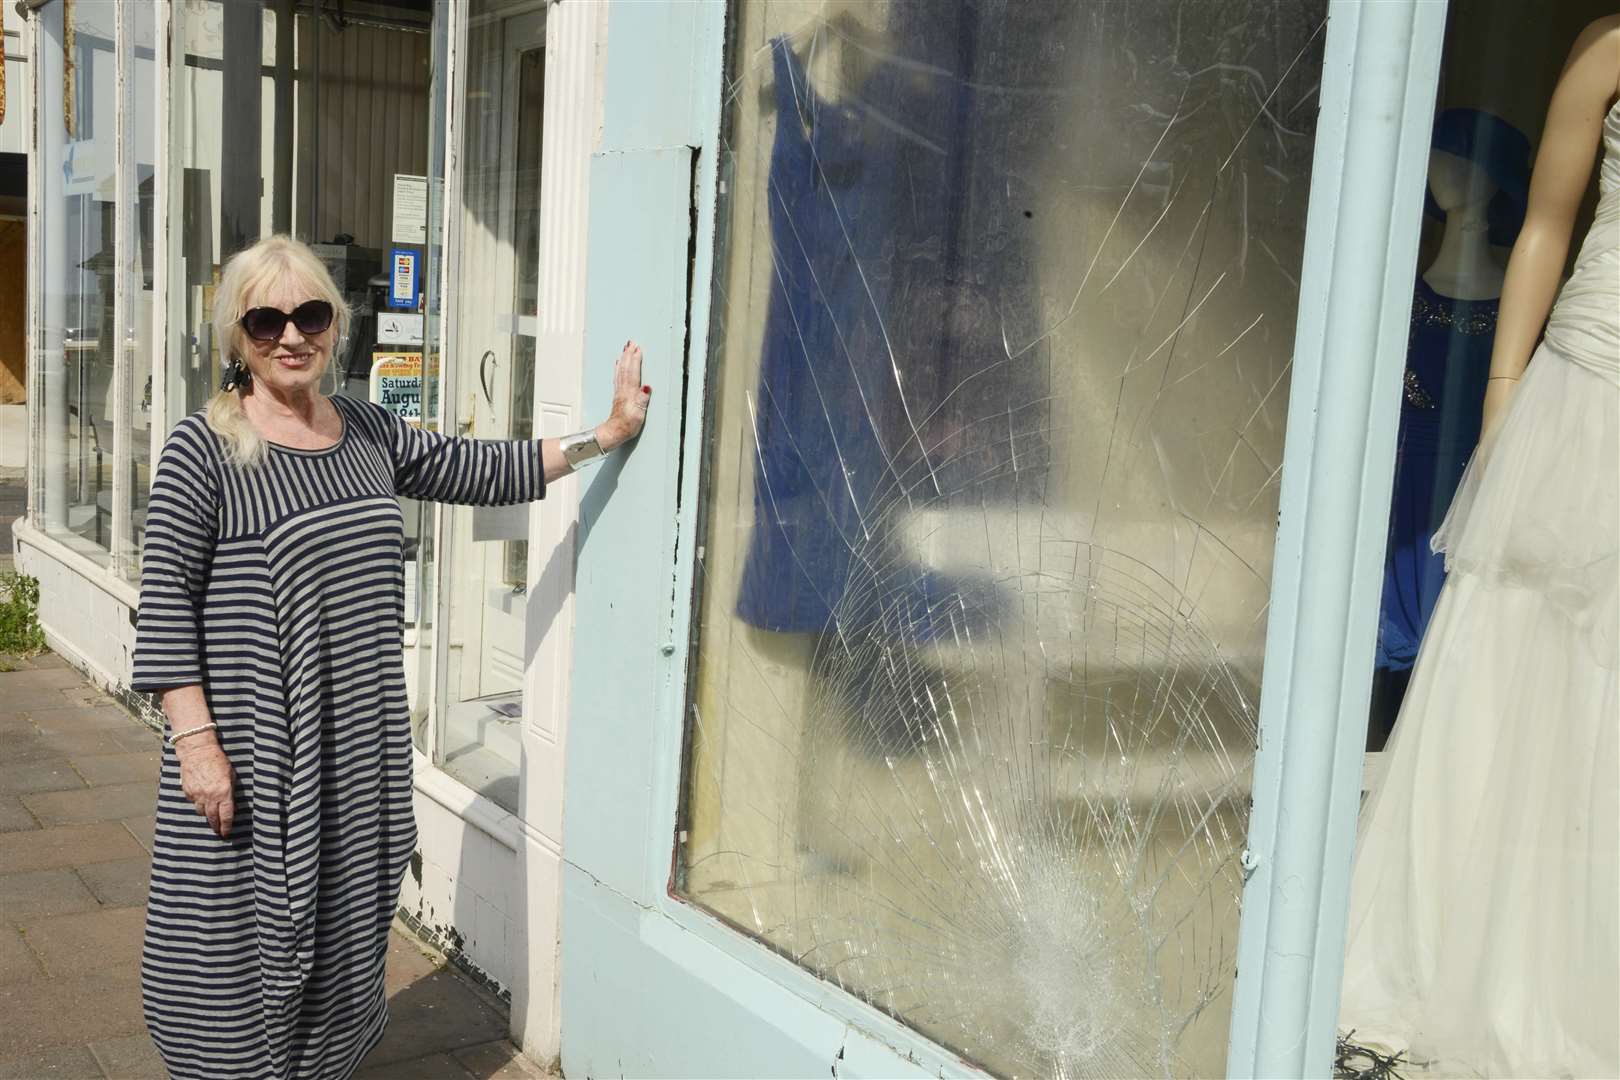 William Street shops have their windows damaged